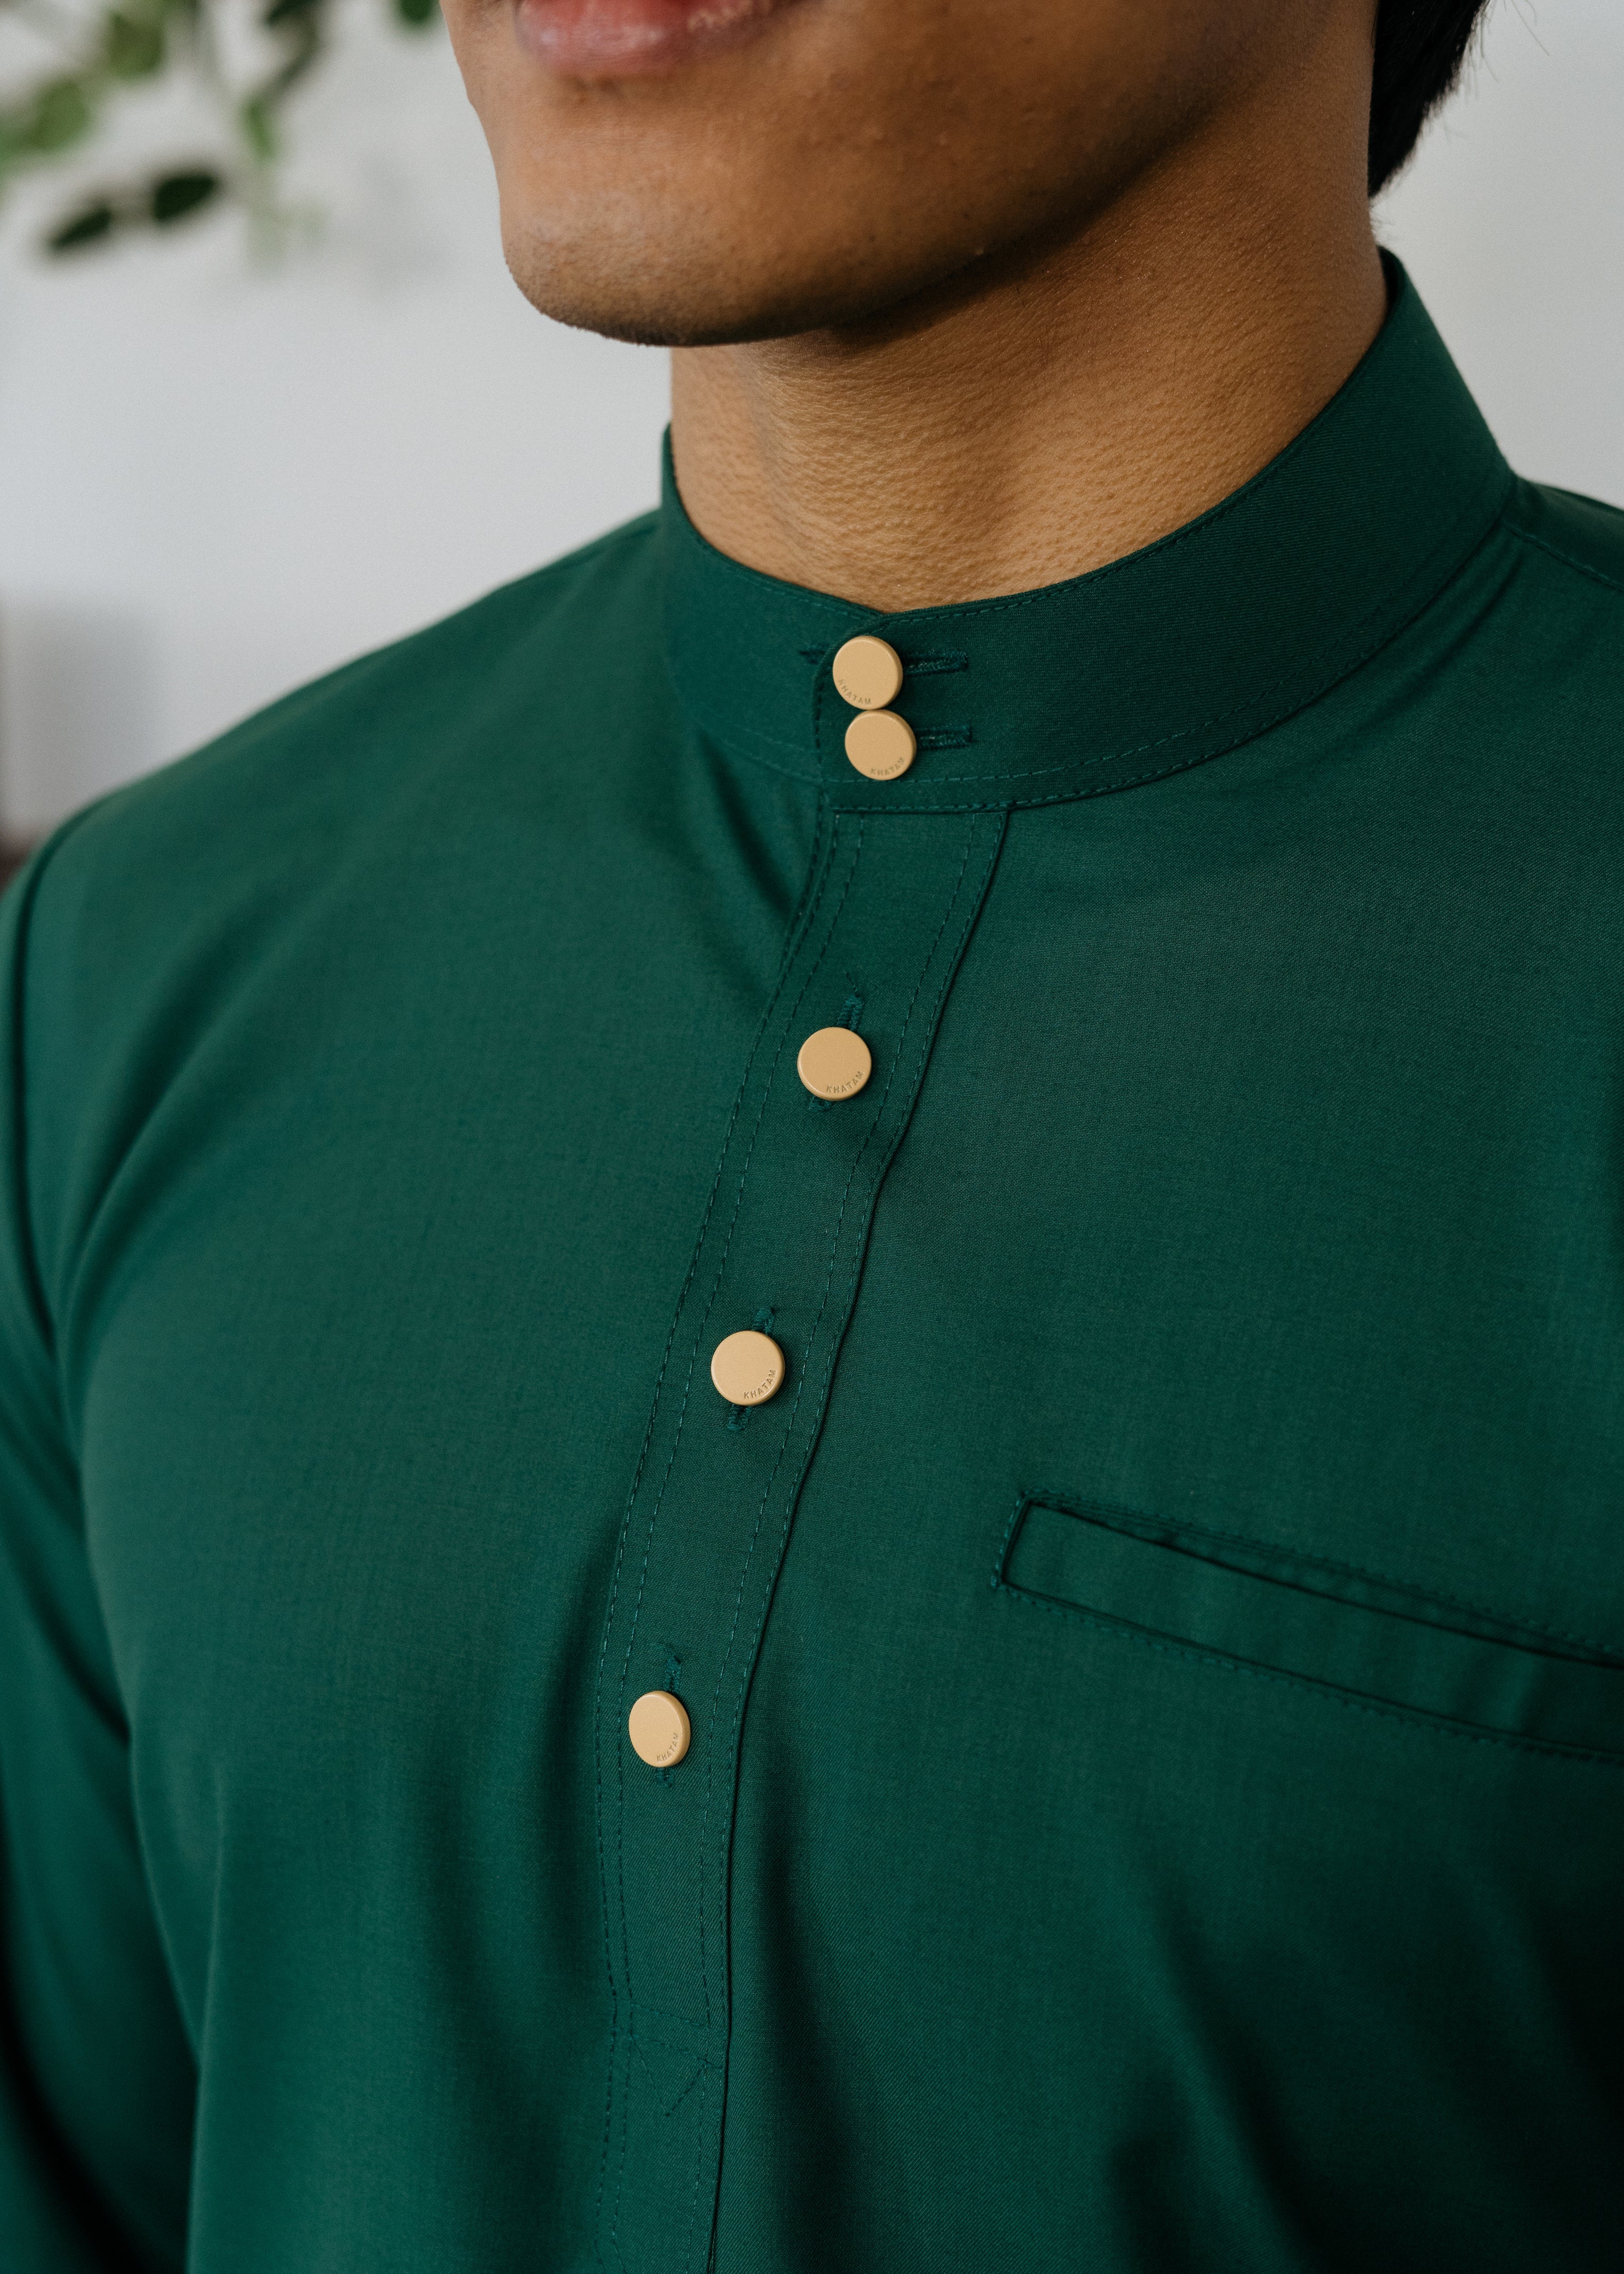 Patawali Baju Melayu Cekak Musang Emerald Green